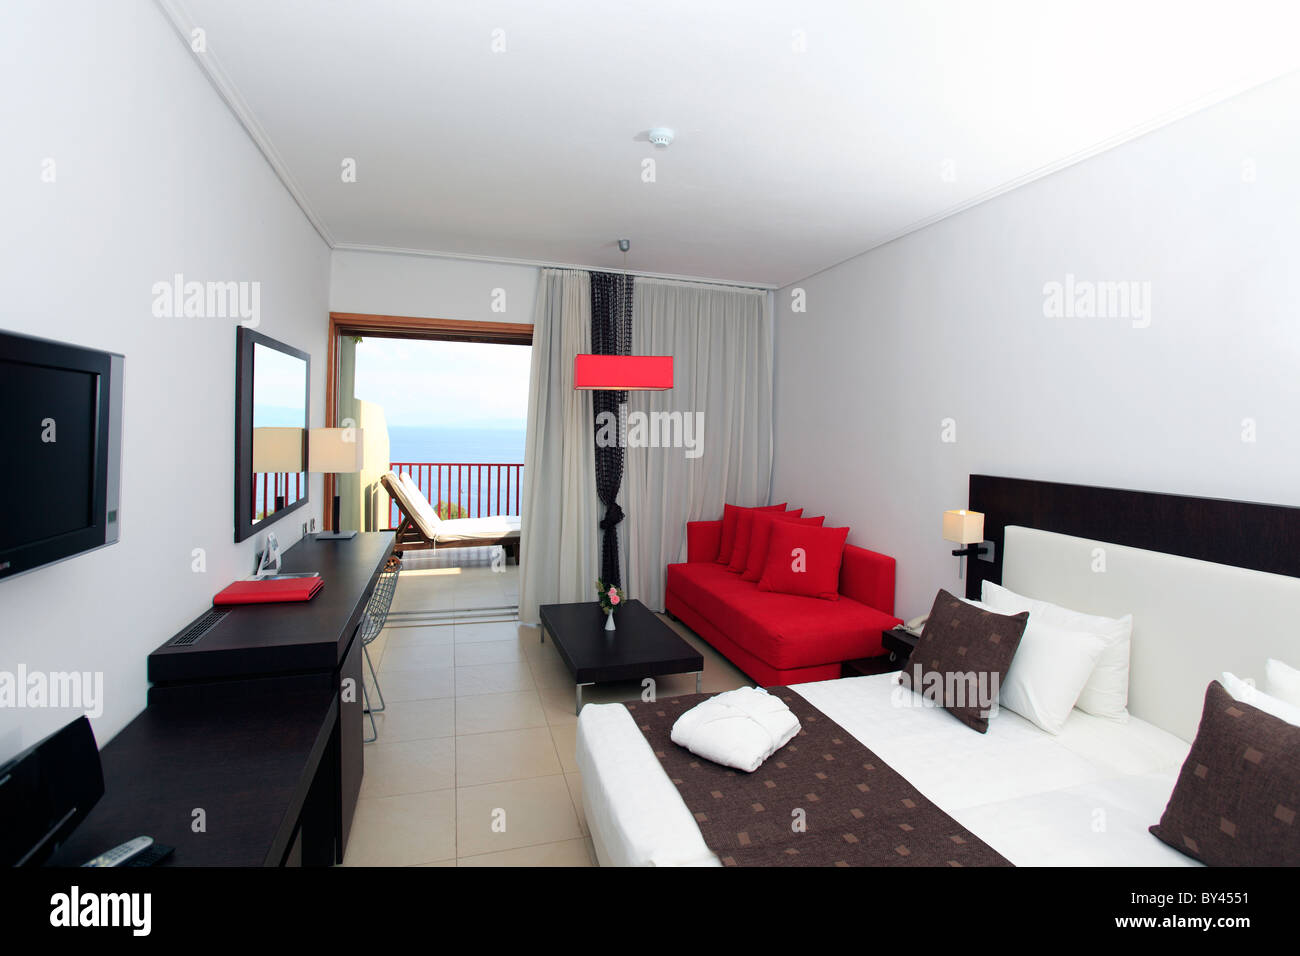 GREECE SPORADES SKIATHOS ISLAND A BEDROOM AT THE SKIATHOS PALACE HOTEL Stock Photo